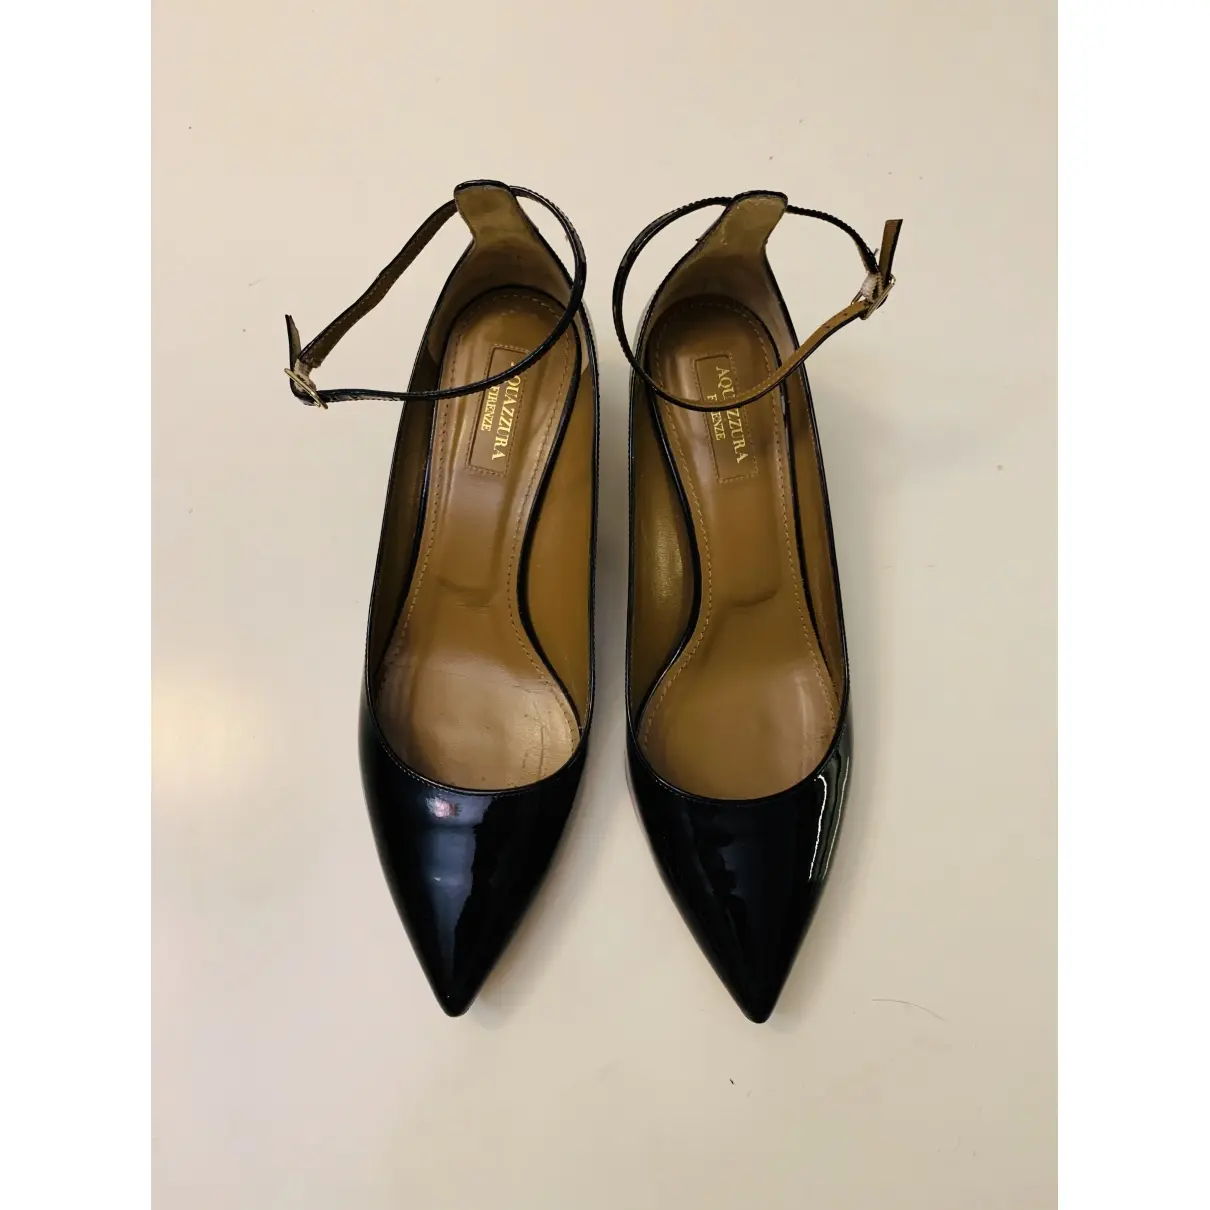 Aquazzura Patent leather heels for sale